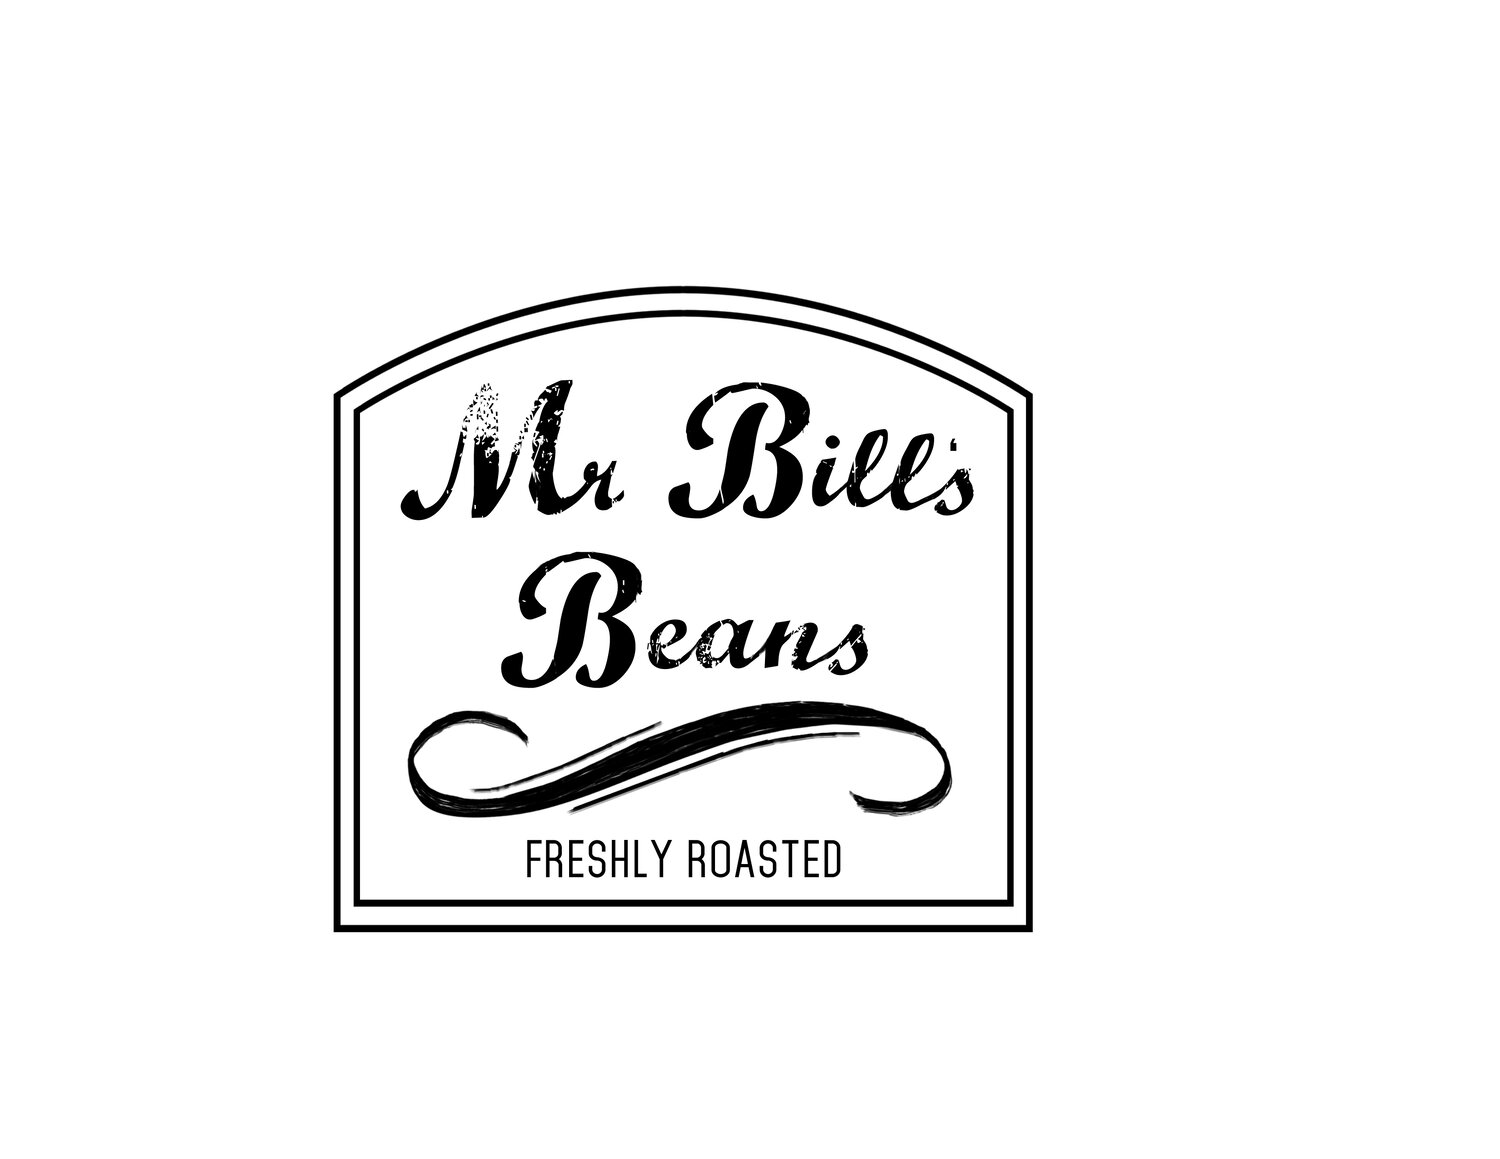 Mr. Bill's Beans